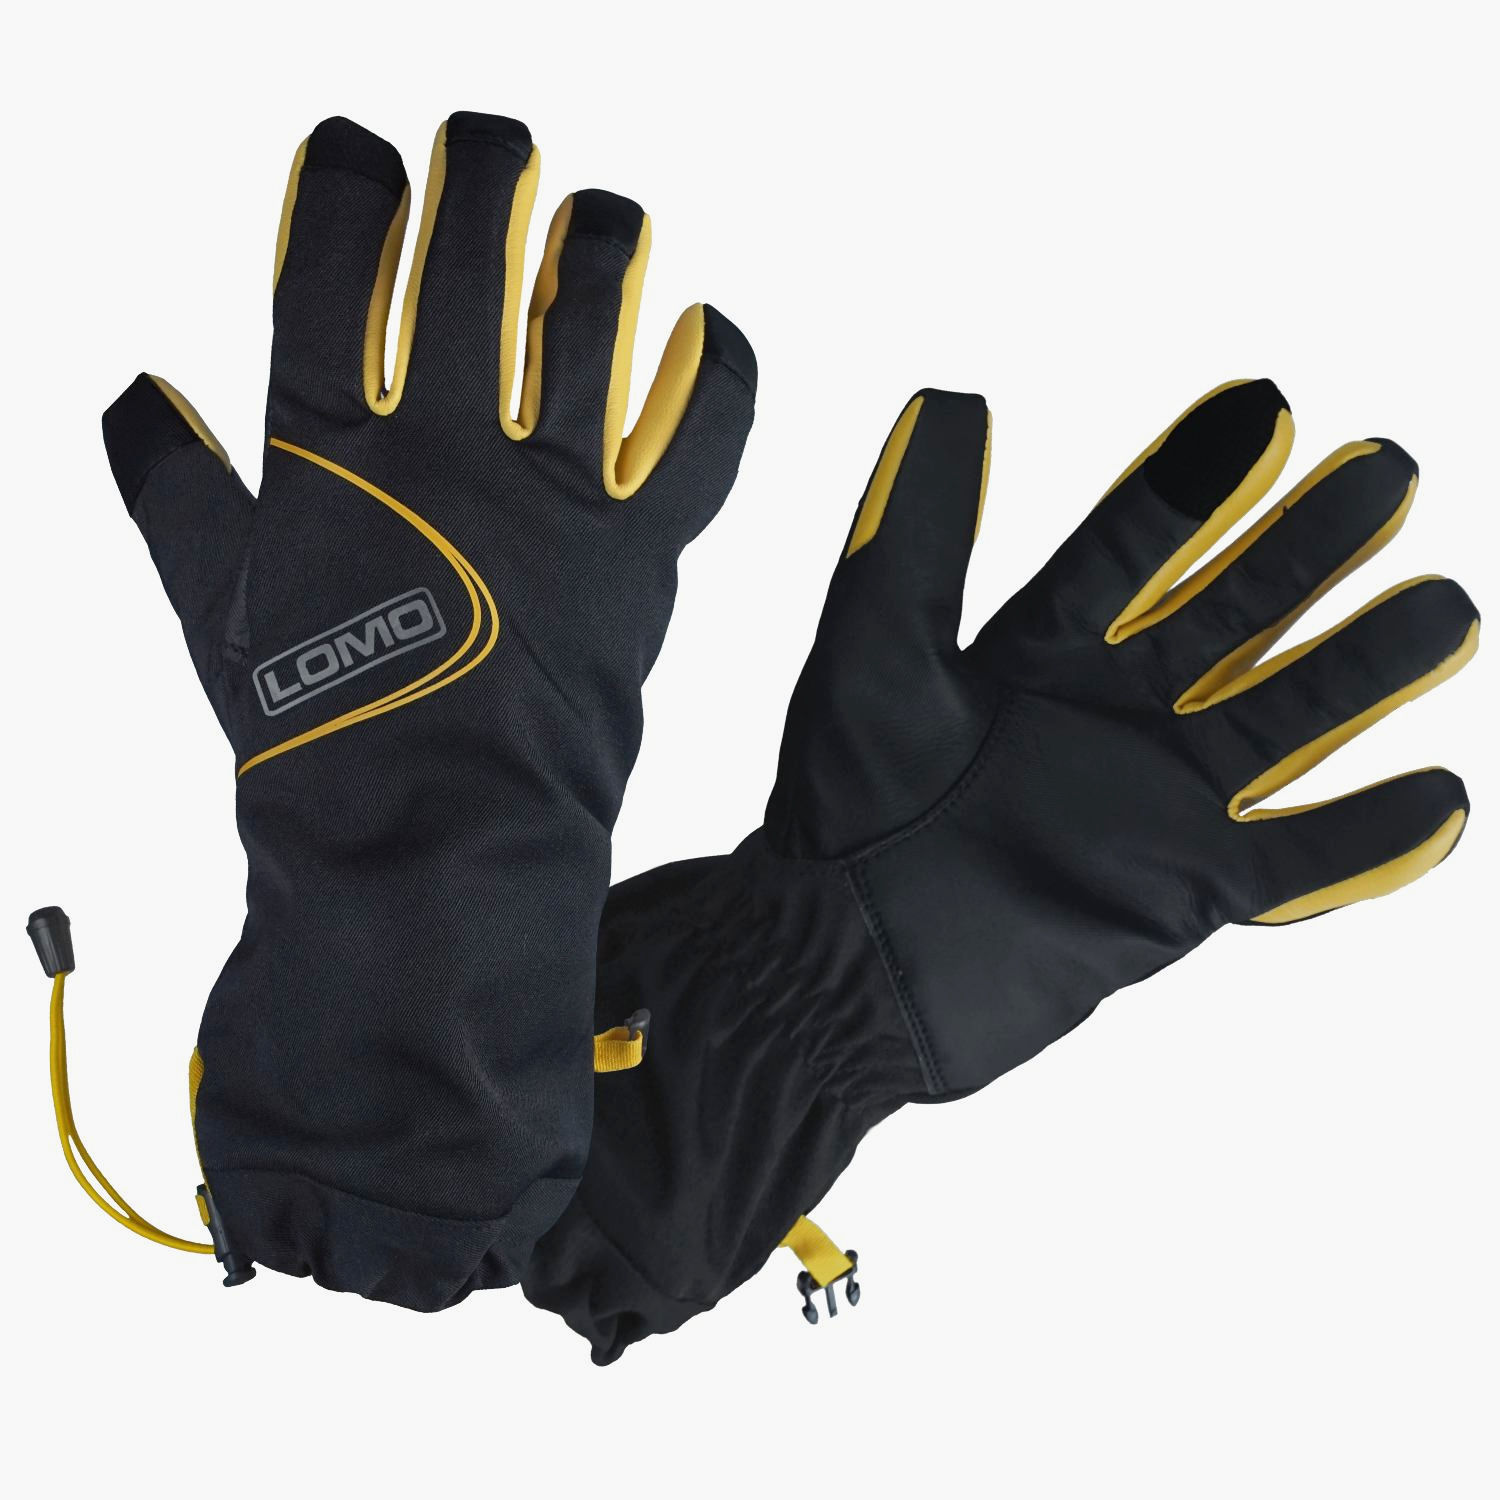 Lomo Ocean Helm Gloves For Sailing